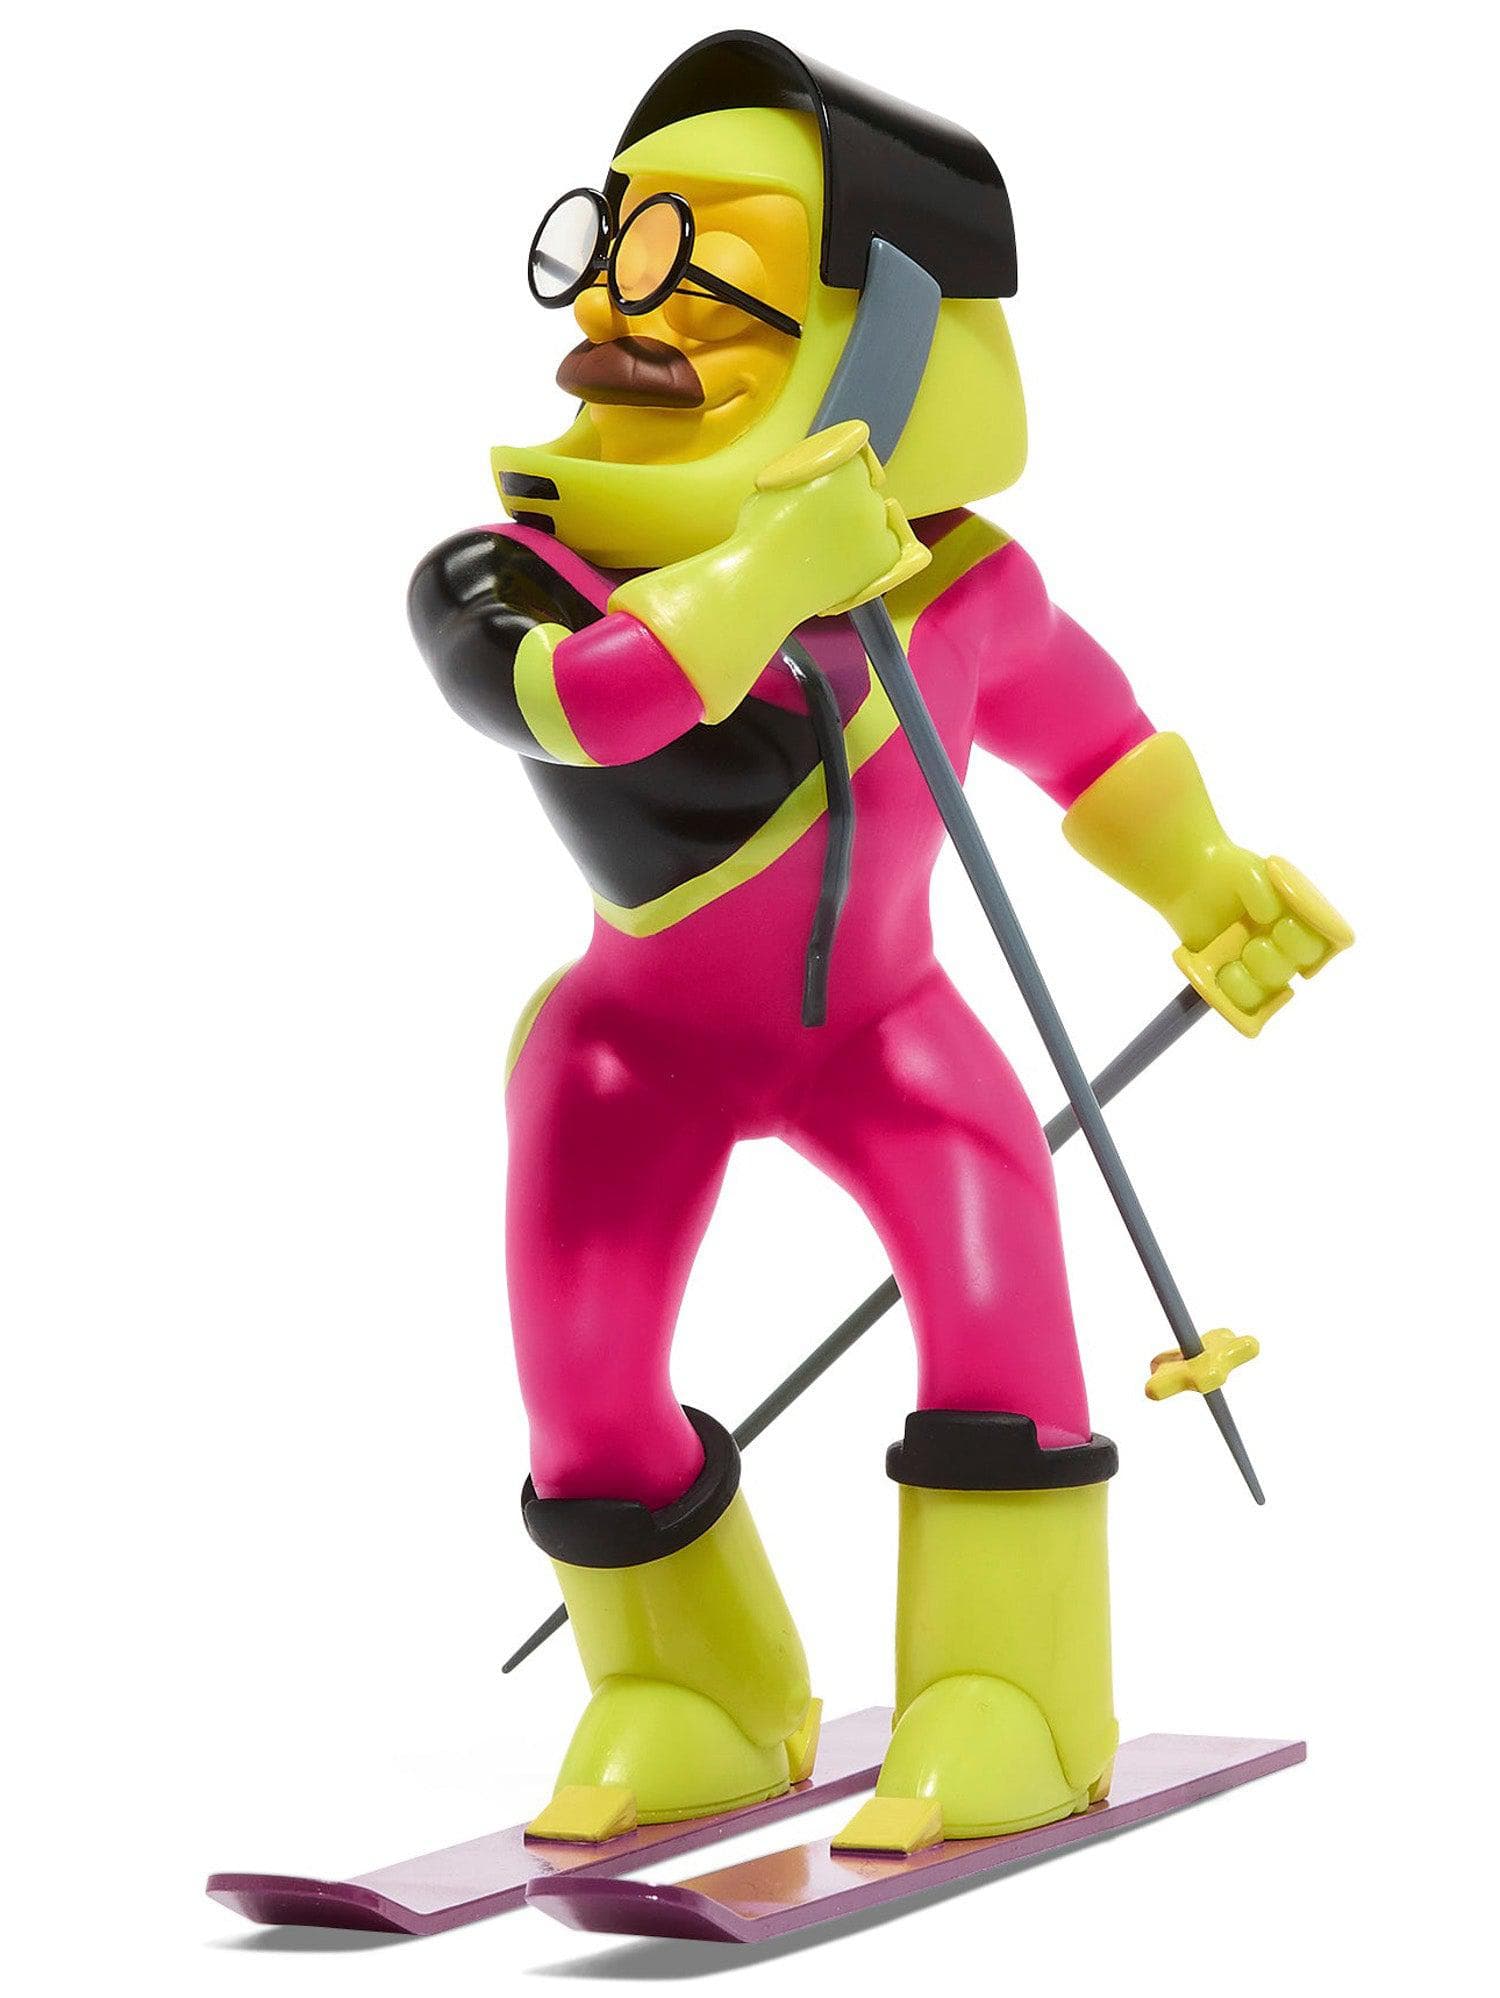 Kidrobot - The Simpsons Stupid Sexy Flanders 8" Vinyl Figure - NEON Edition (Limited Edition of 500) - costumes.com